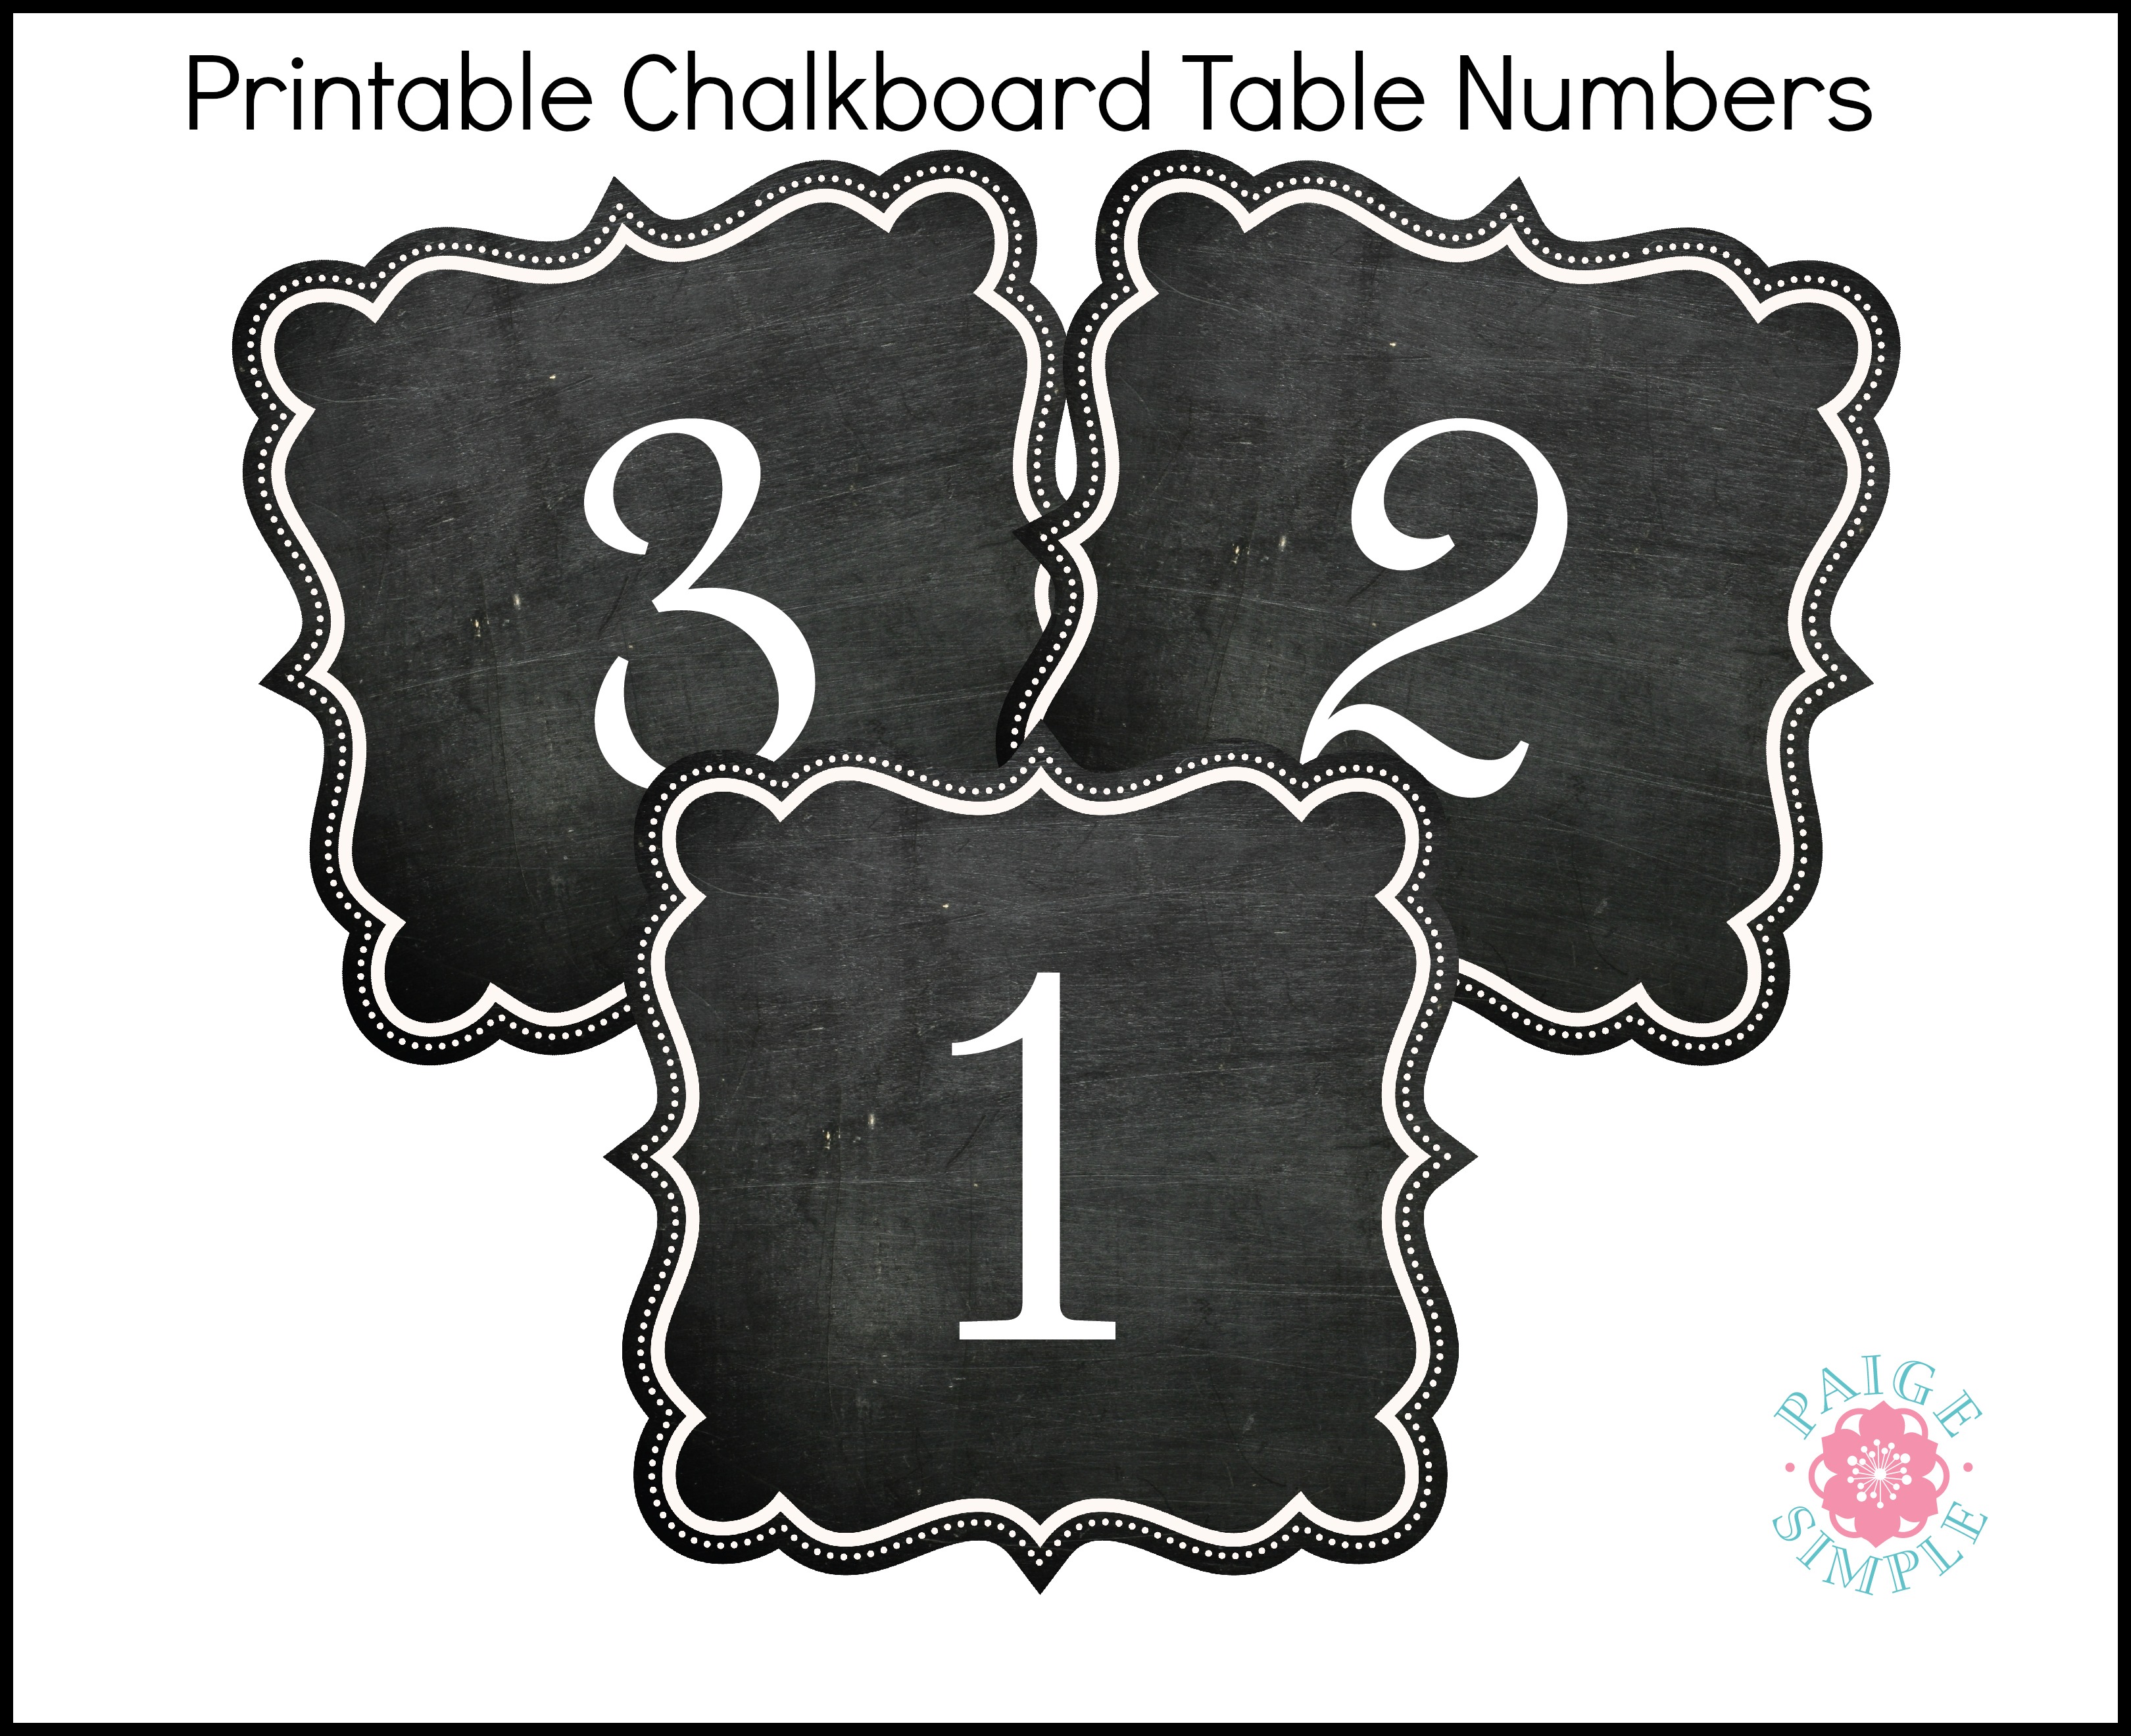 printable-chalkboard-table-numbers-rustic-wedding-chic